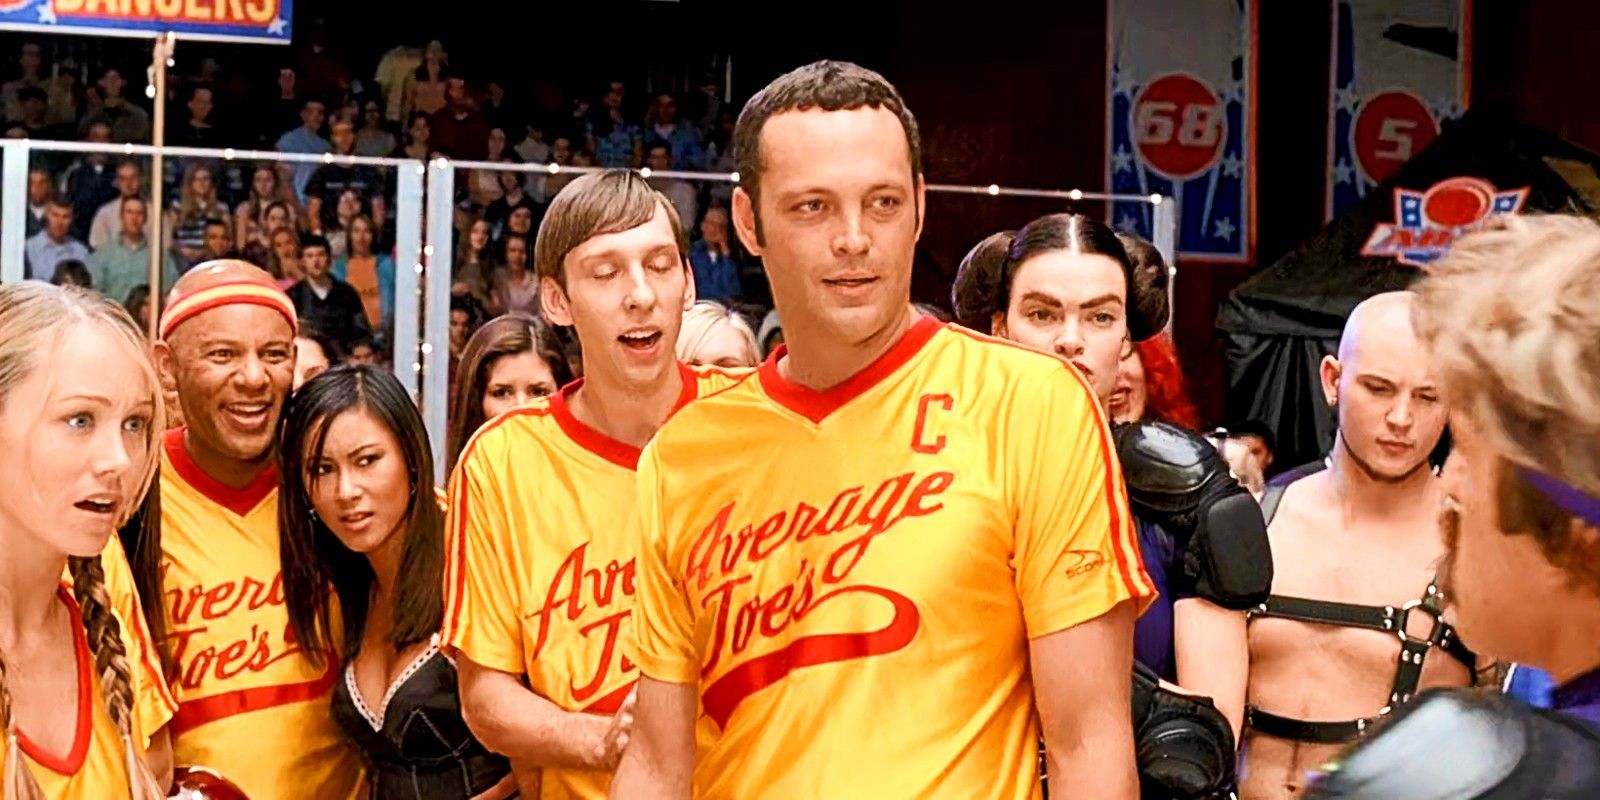 Vince Vaughn in Dodgeball surrounded by Average Joes team looking at Ben Stiller